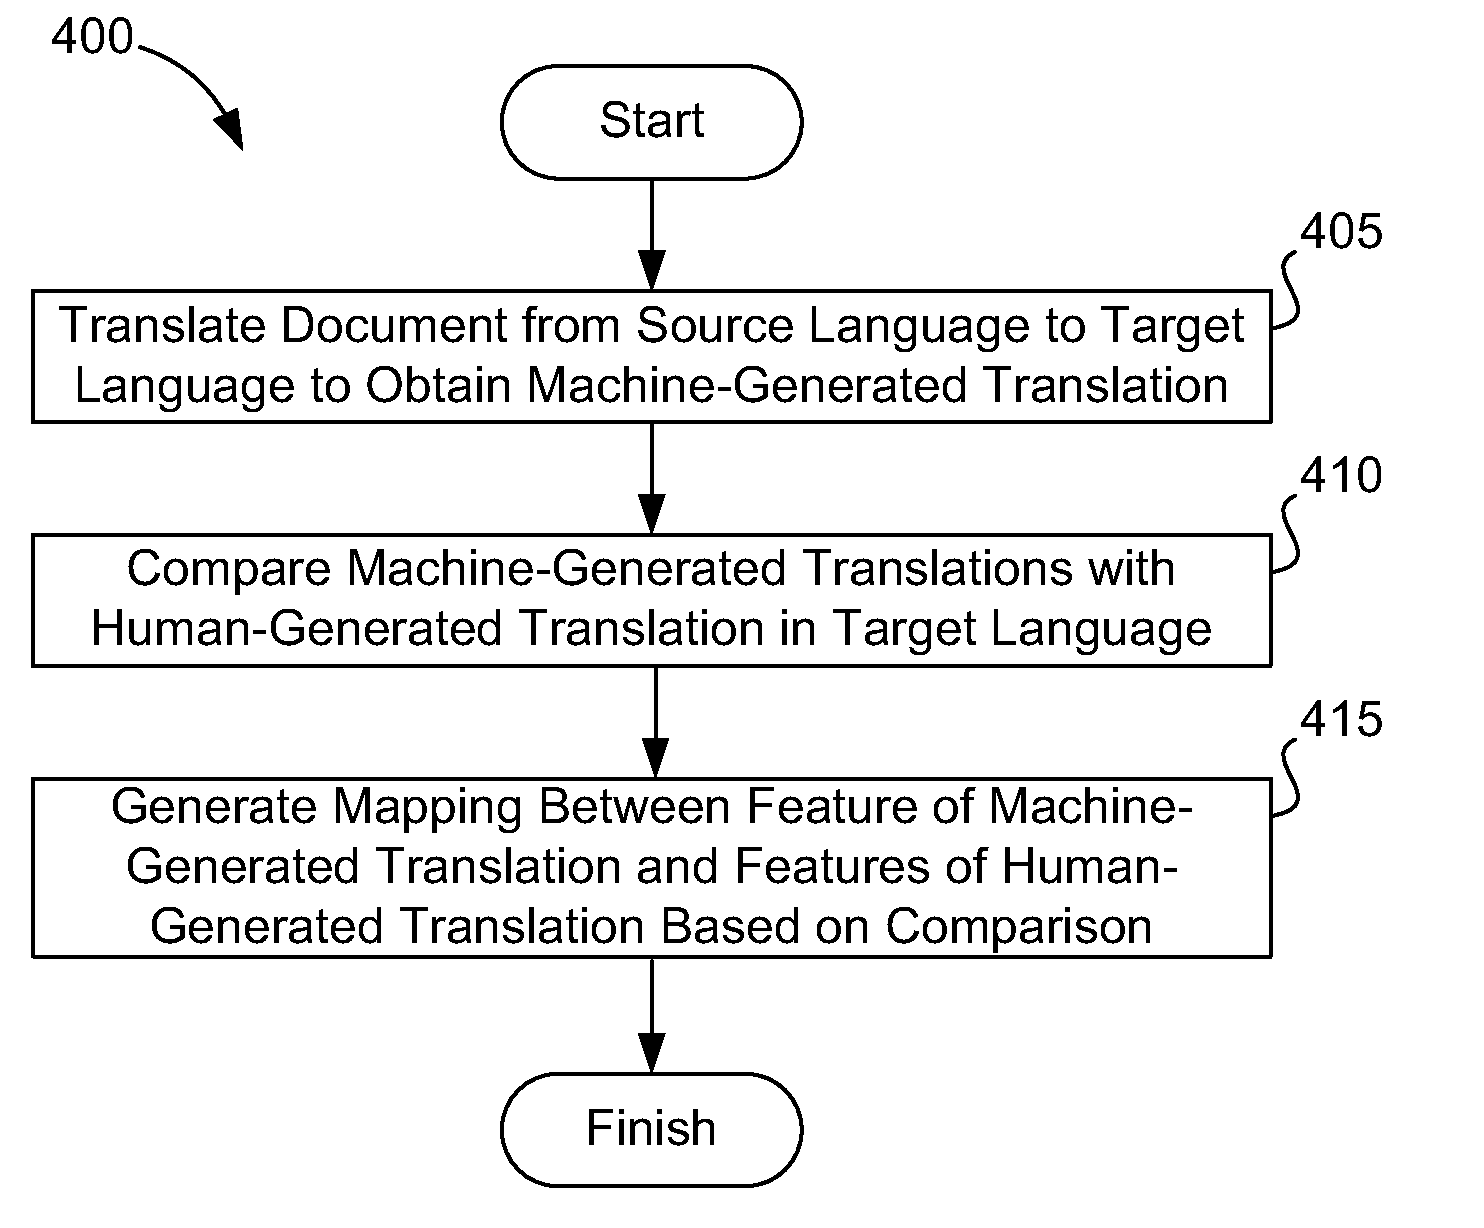 Providing Machine-Generated Translations and Corresponding Trust Levels